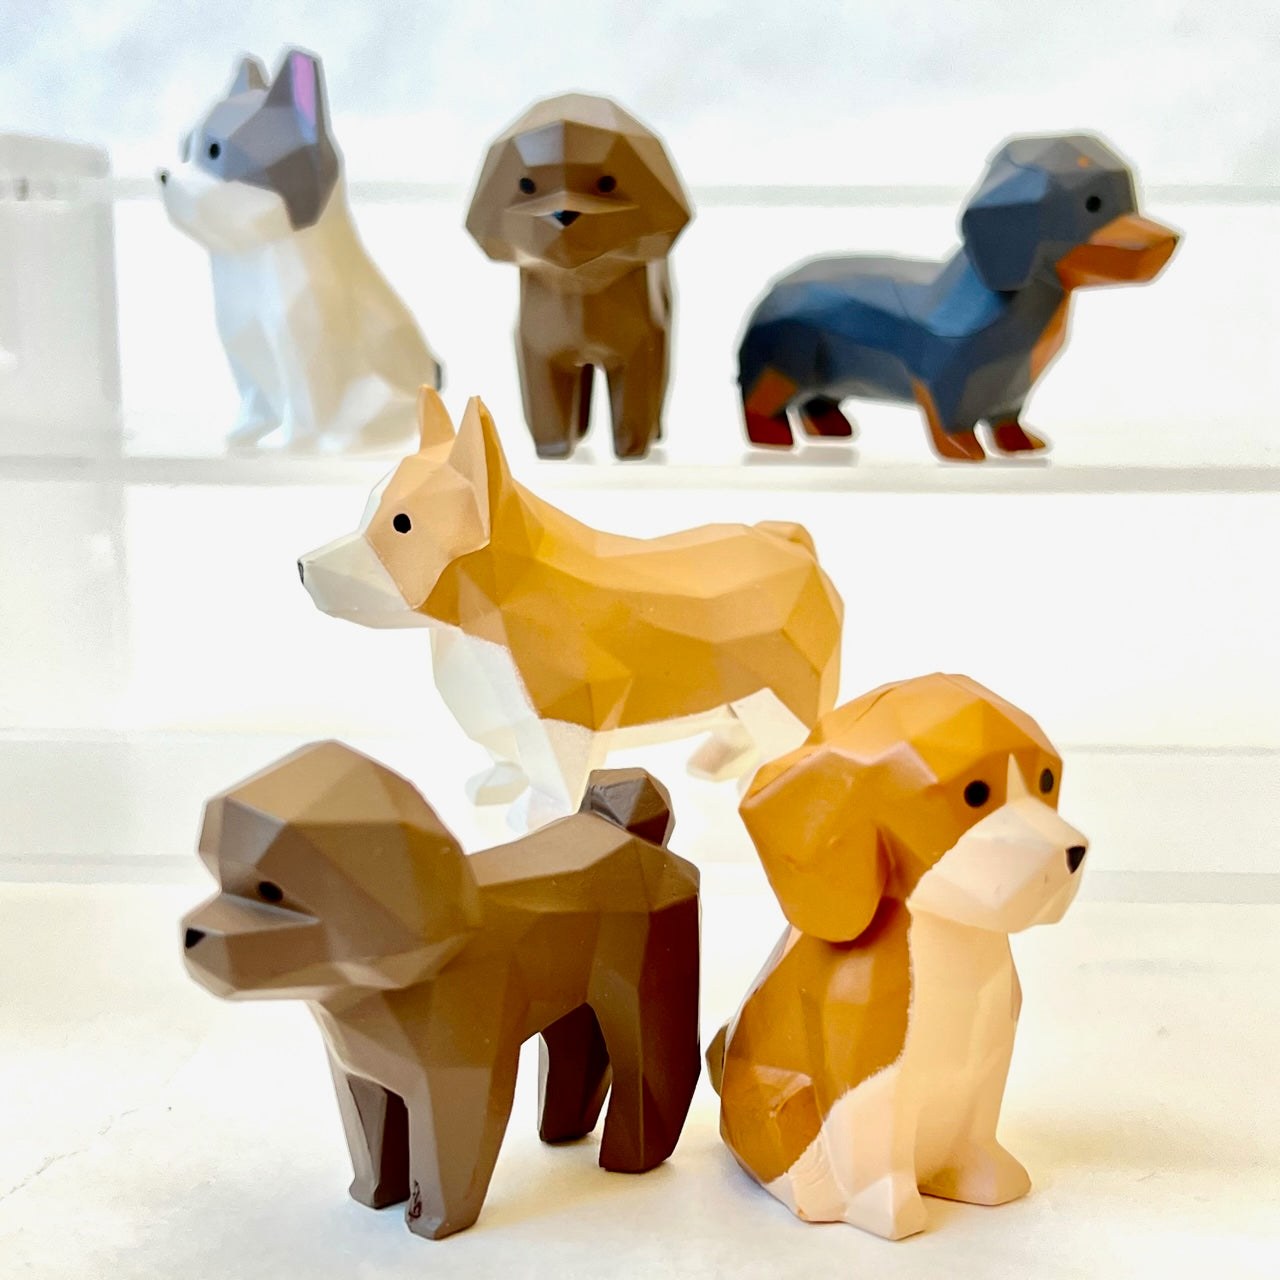 70257 Carved Dogs Figurine Capsule-6